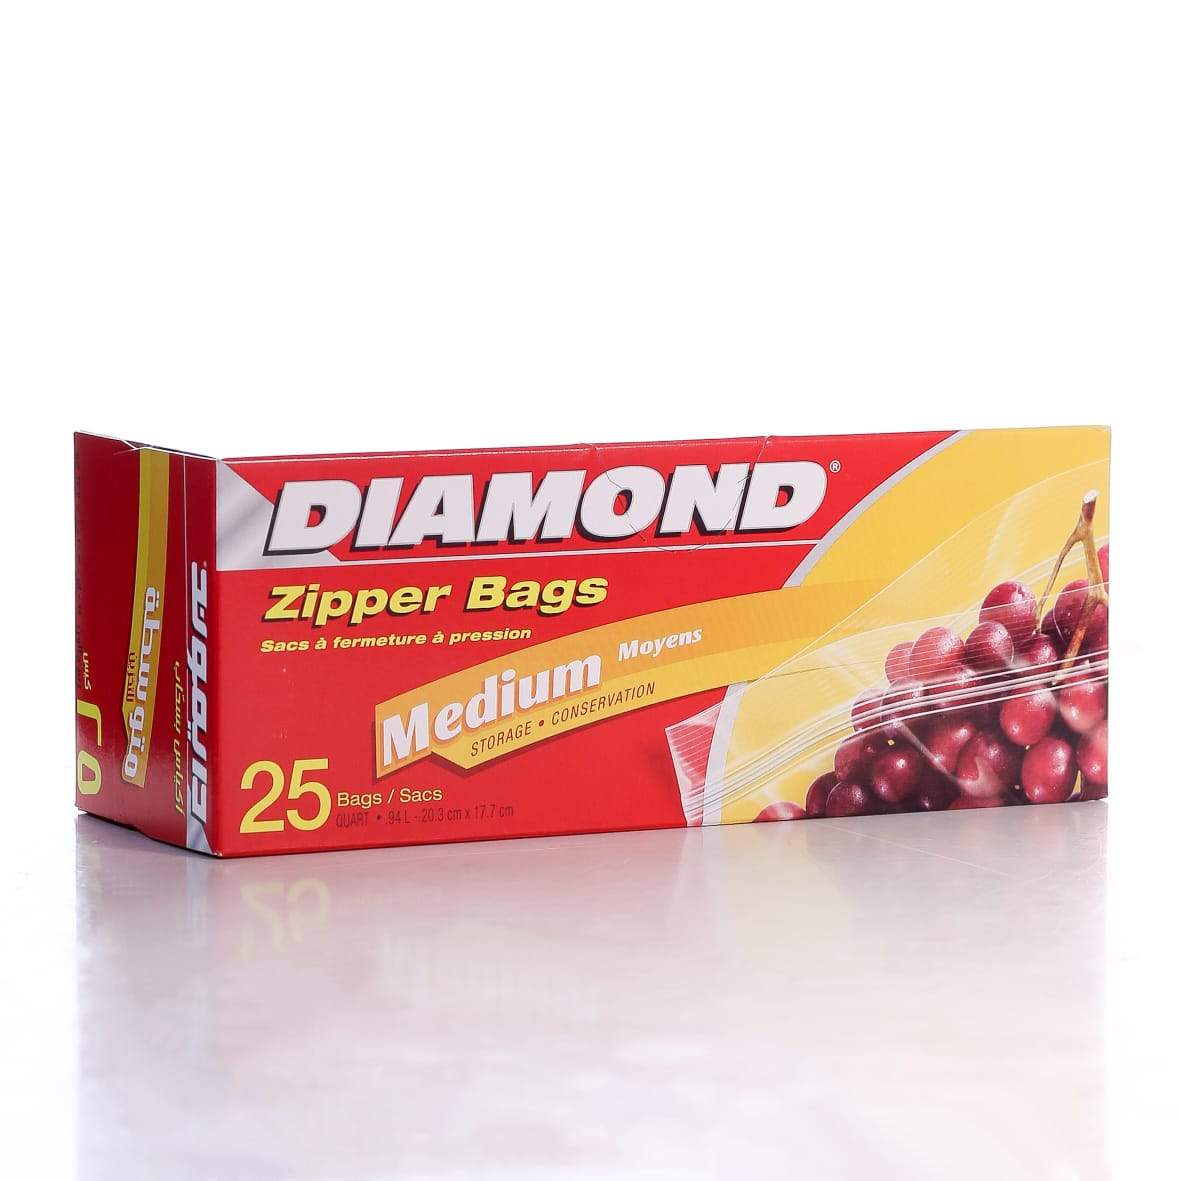 DIAMOND ZIPPER BAGS STORAGE MEDIUM 25CT PC